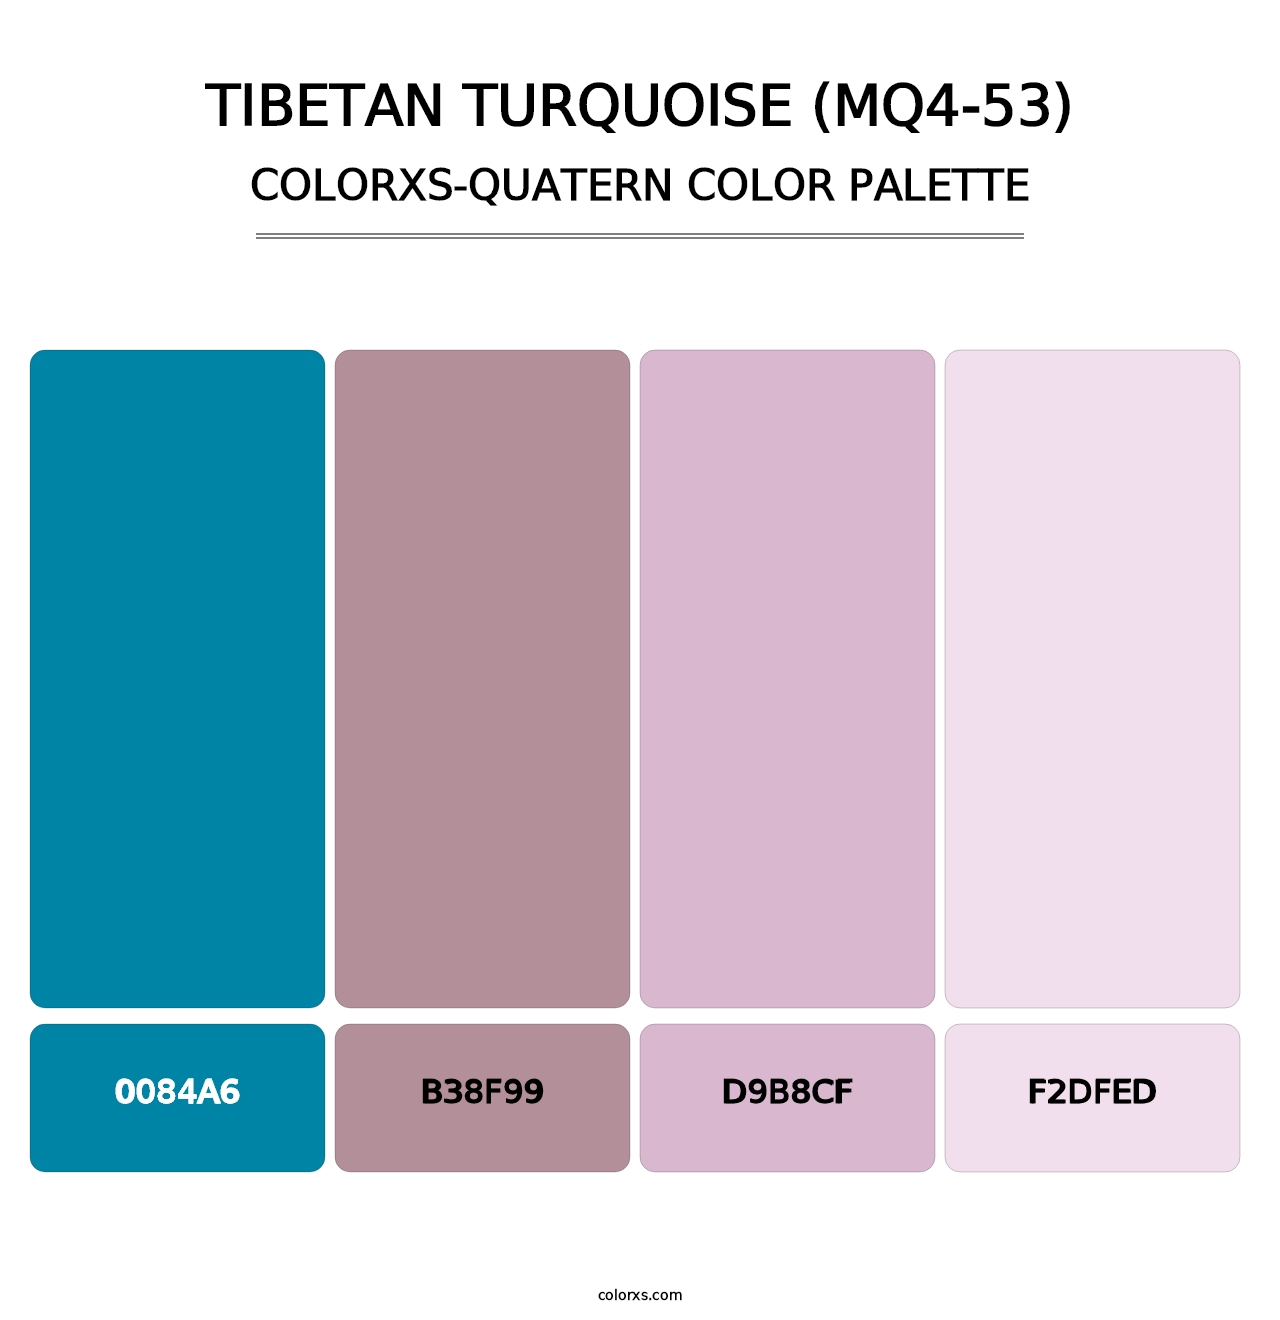 Tibetan Turquoise (MQ4-53) - Colorxs Quatern Palette